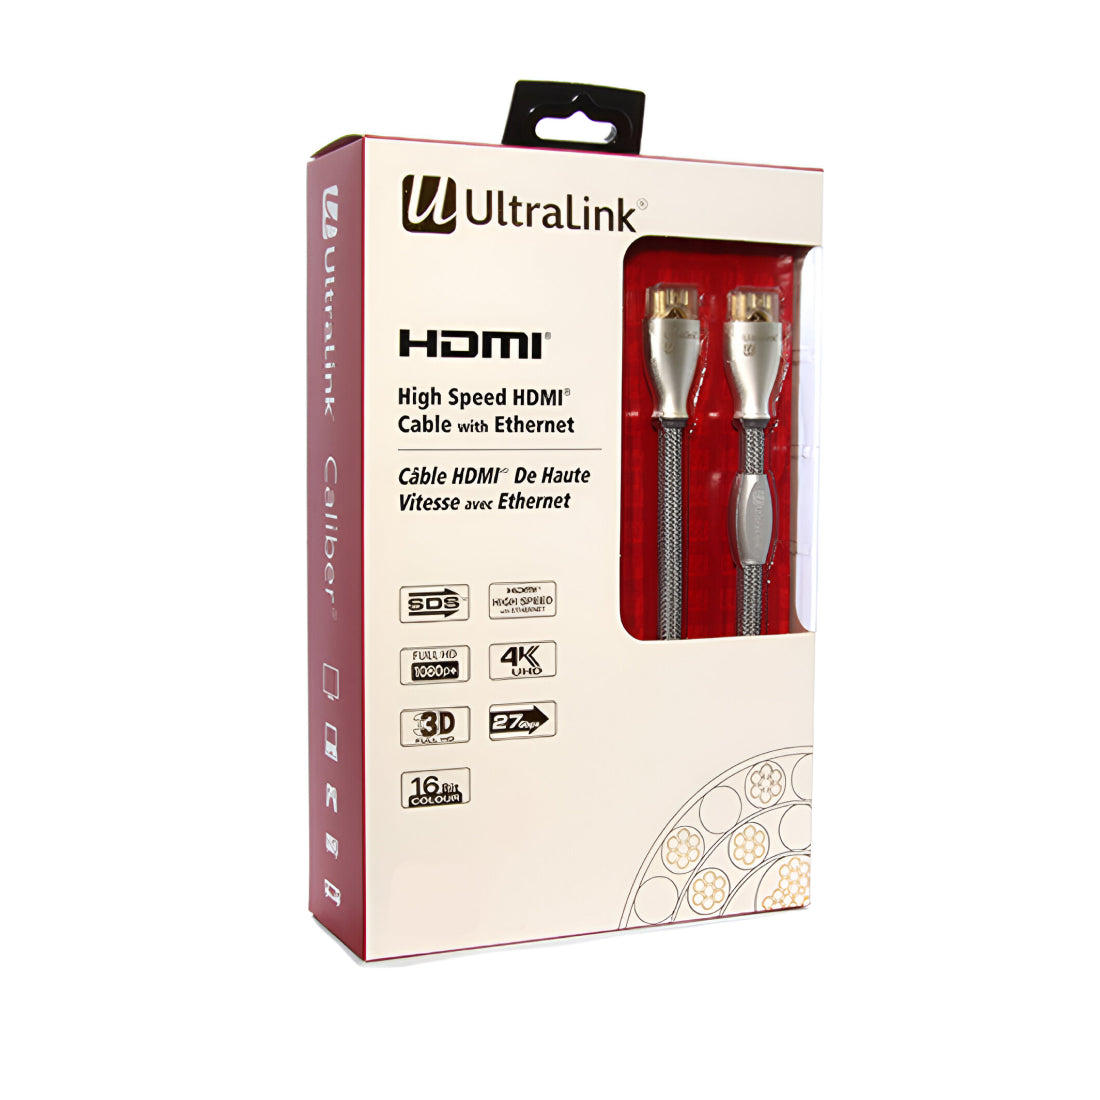 Ultralink UHD4M Caliber HDMI Cable – 4 Meters